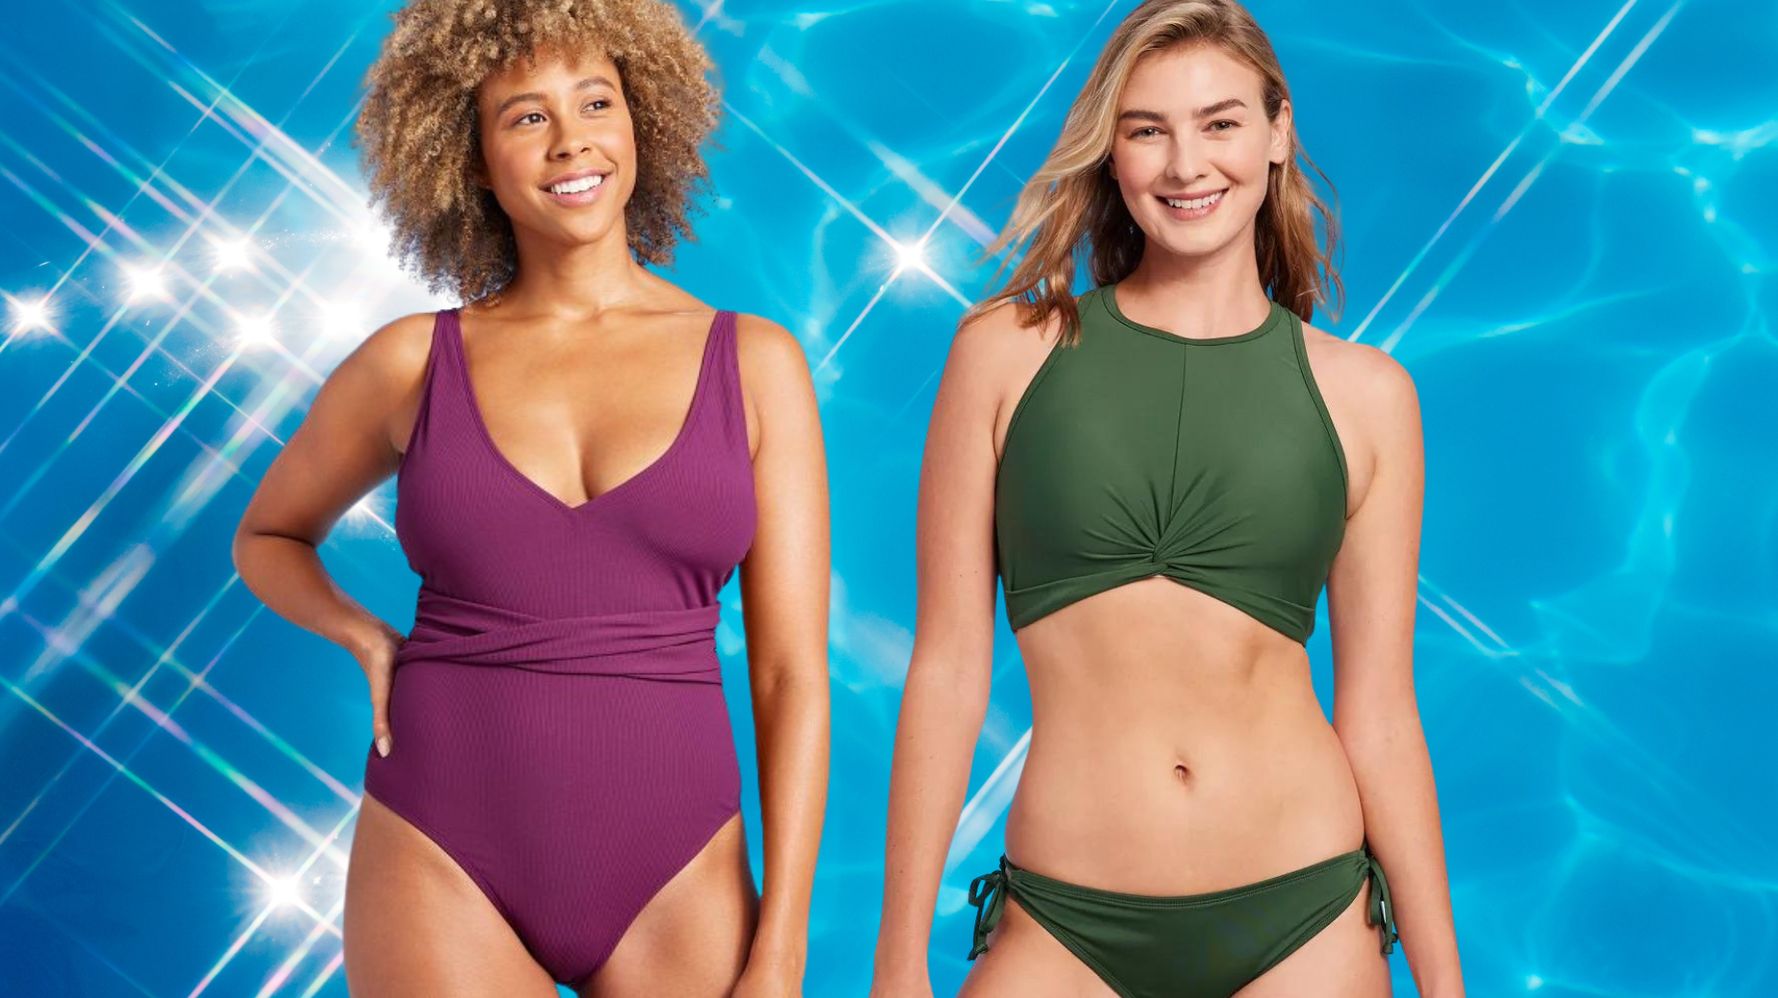 Swimsuits For All Women's Plus Size Longline High Neck Bikini Top - 8,  Black : Target